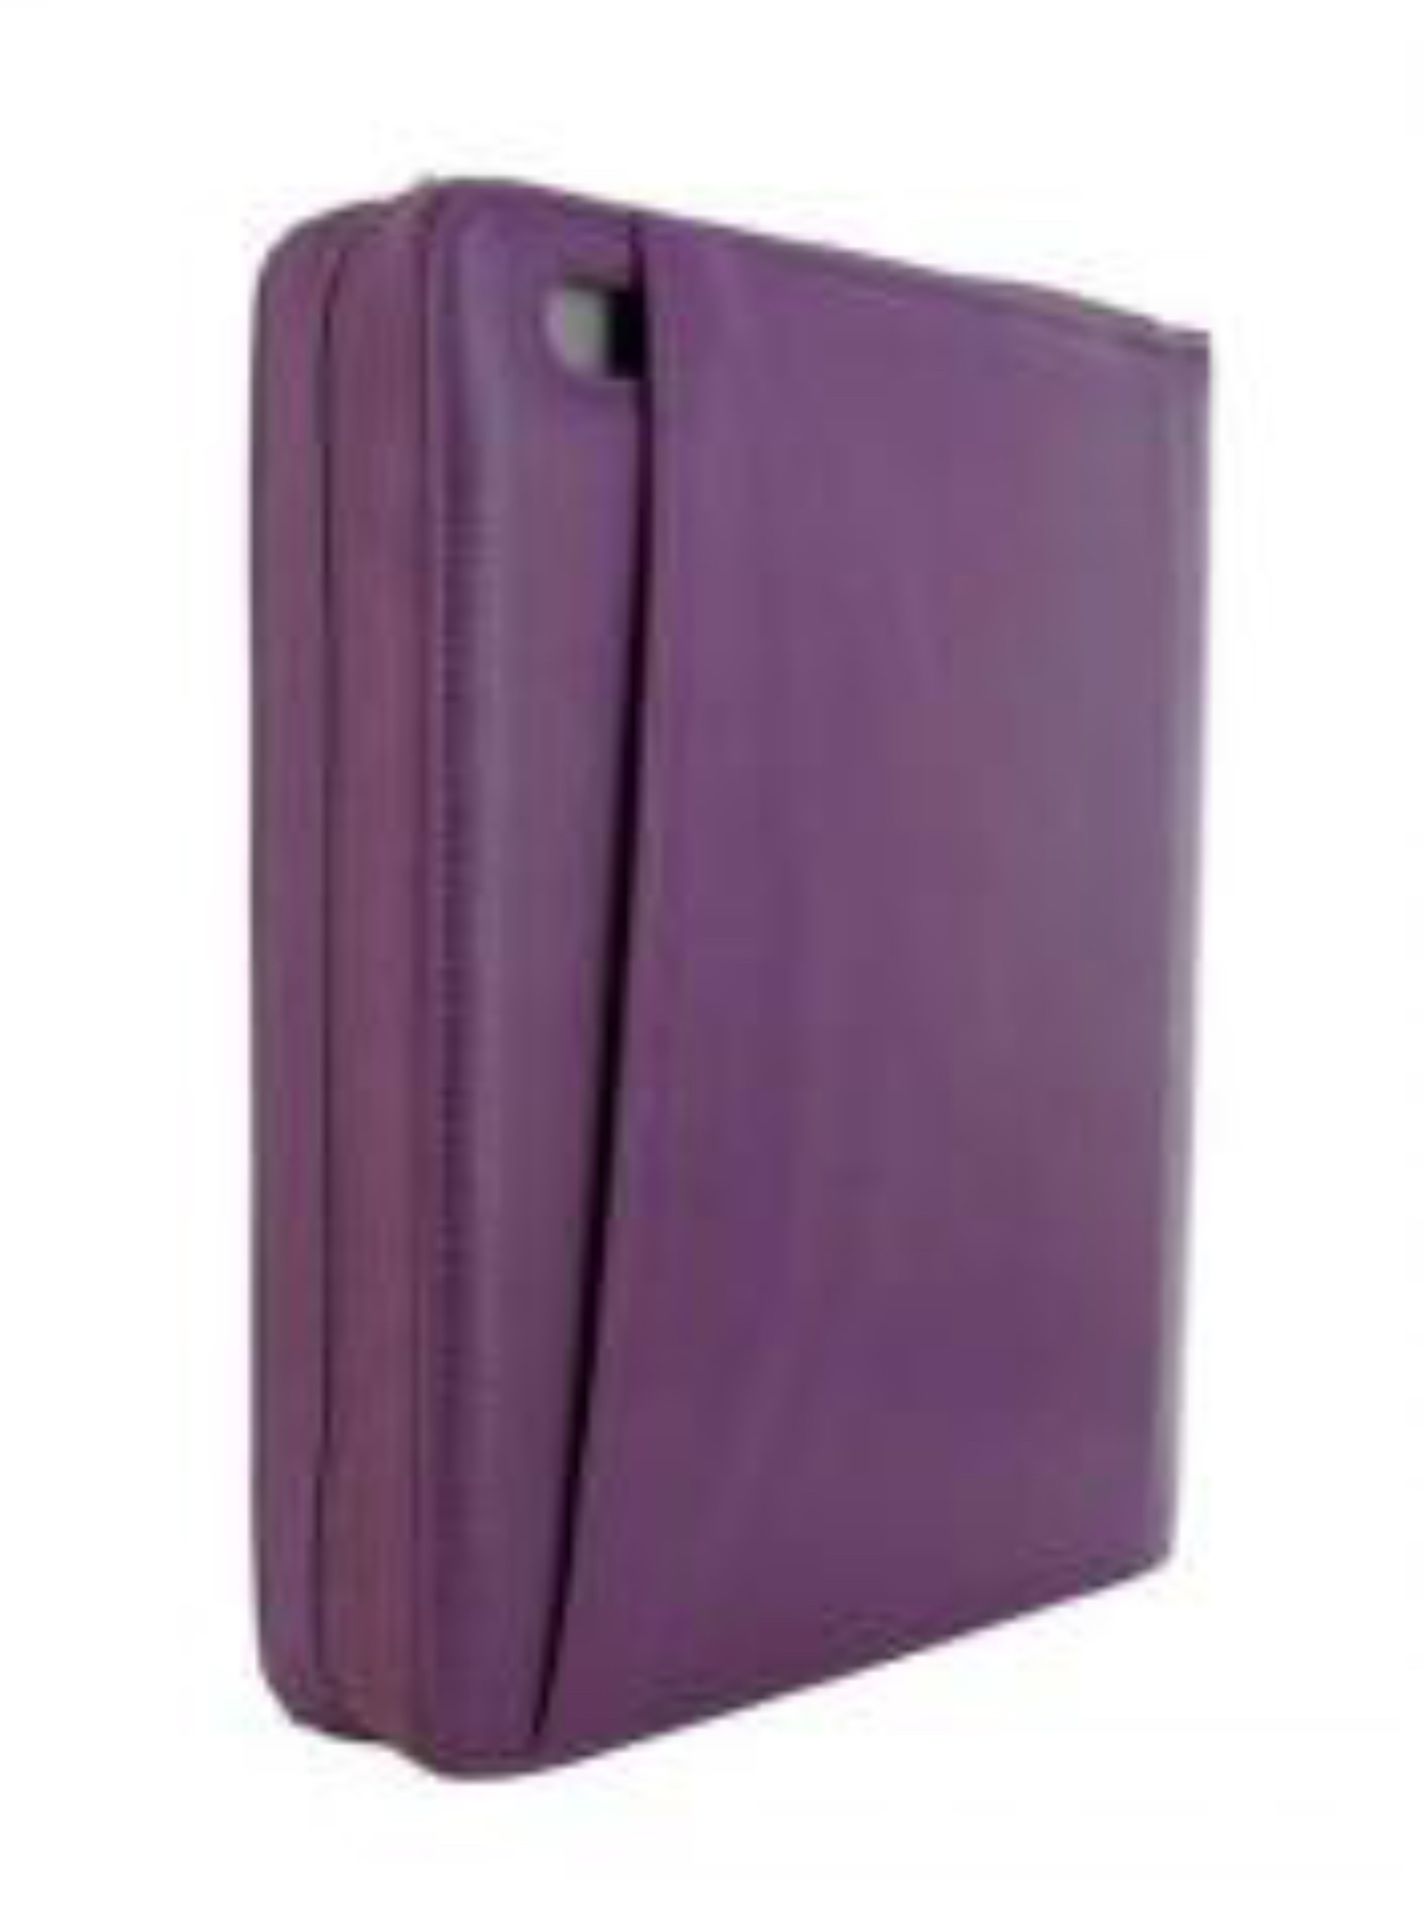 Brand New Filofax Pennybridge A5 iPad Organizer Purple RRP £55.31 - Image 2 of 3